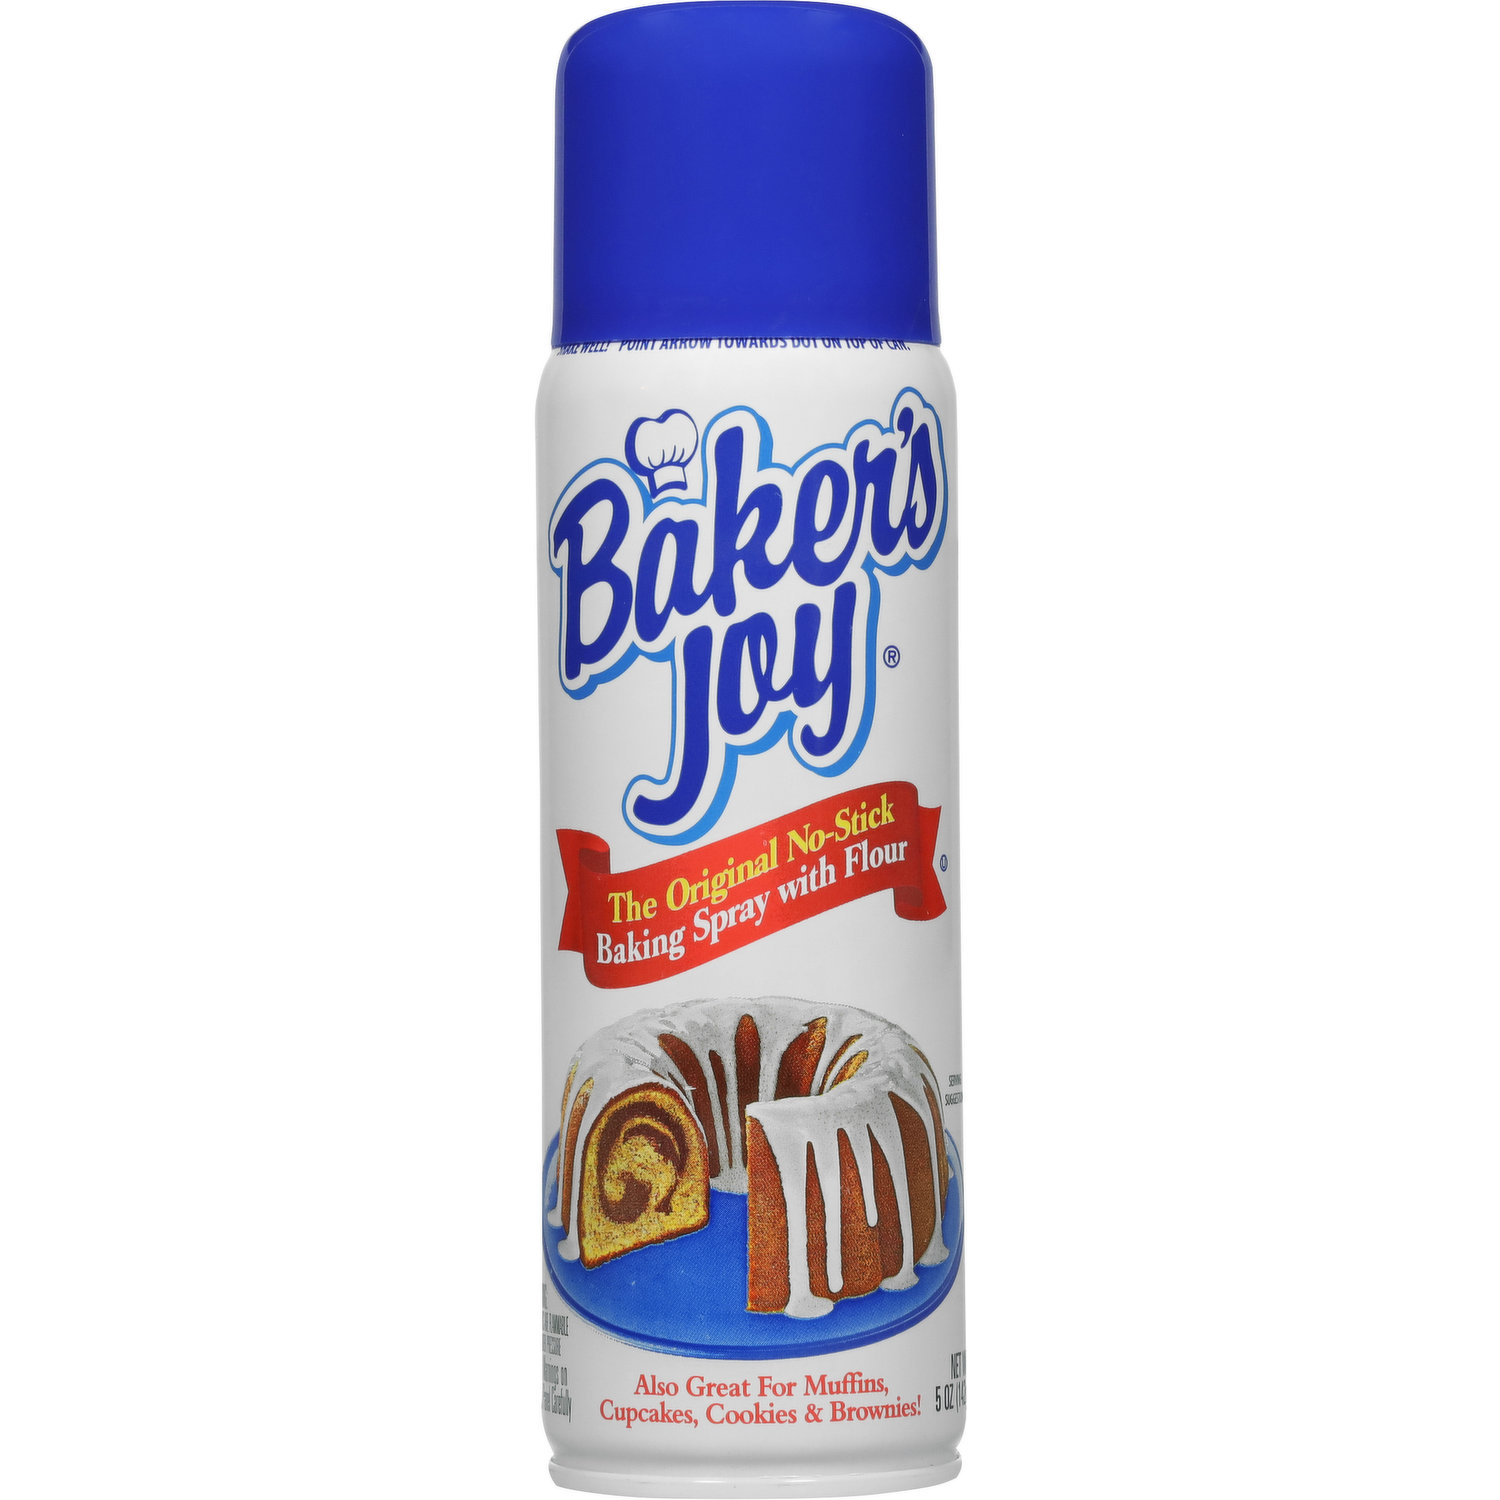 Baker's Joy Baking Spray with Flour, 5 oz